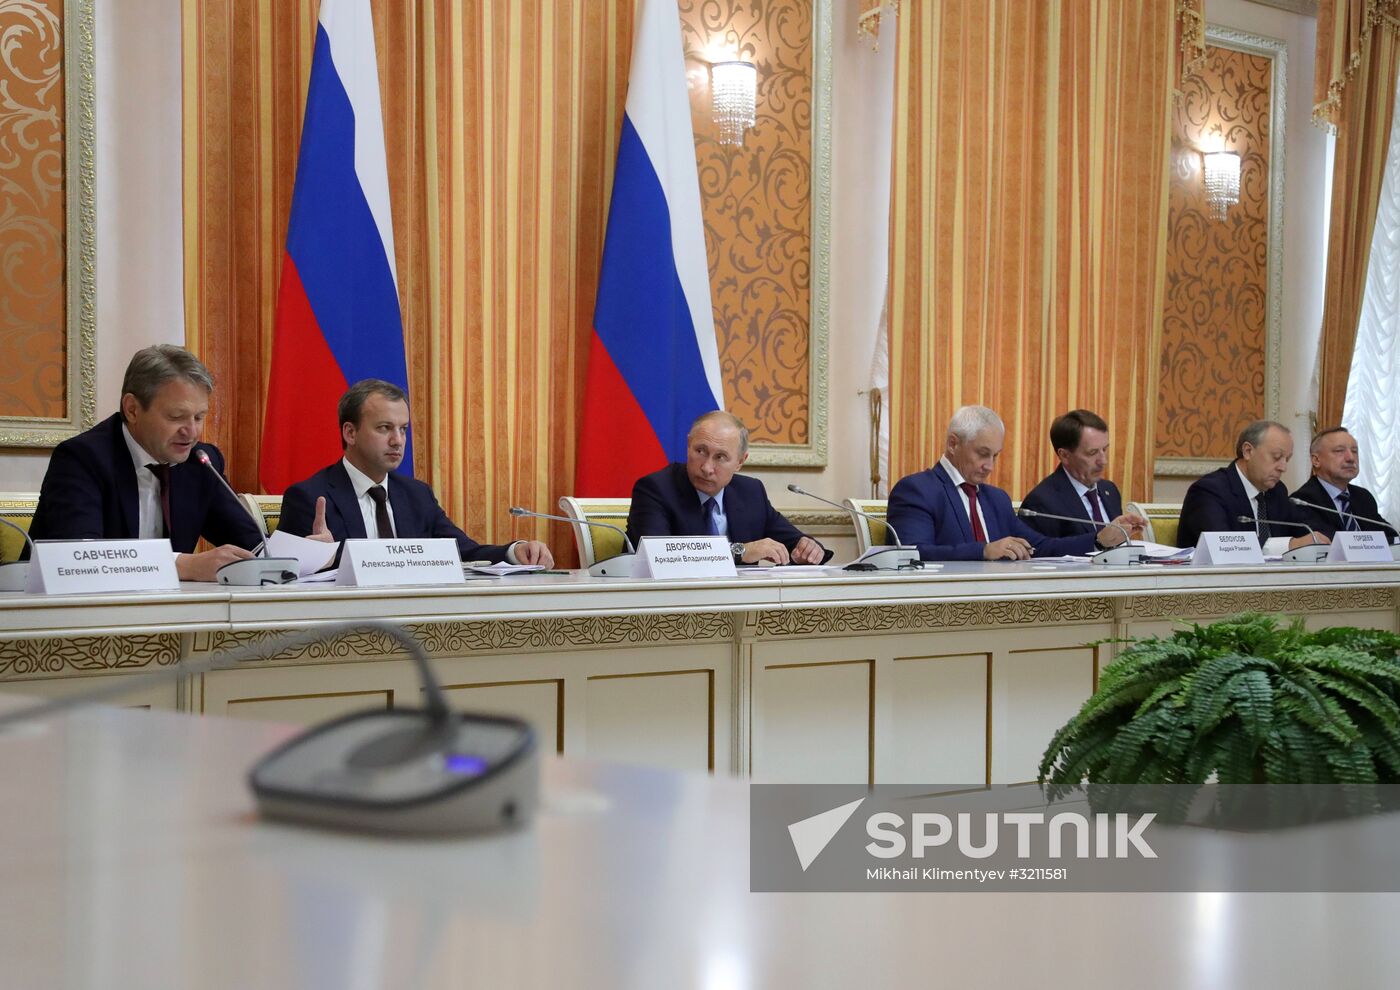 President Vladimir Putin's working trip to Voronezh